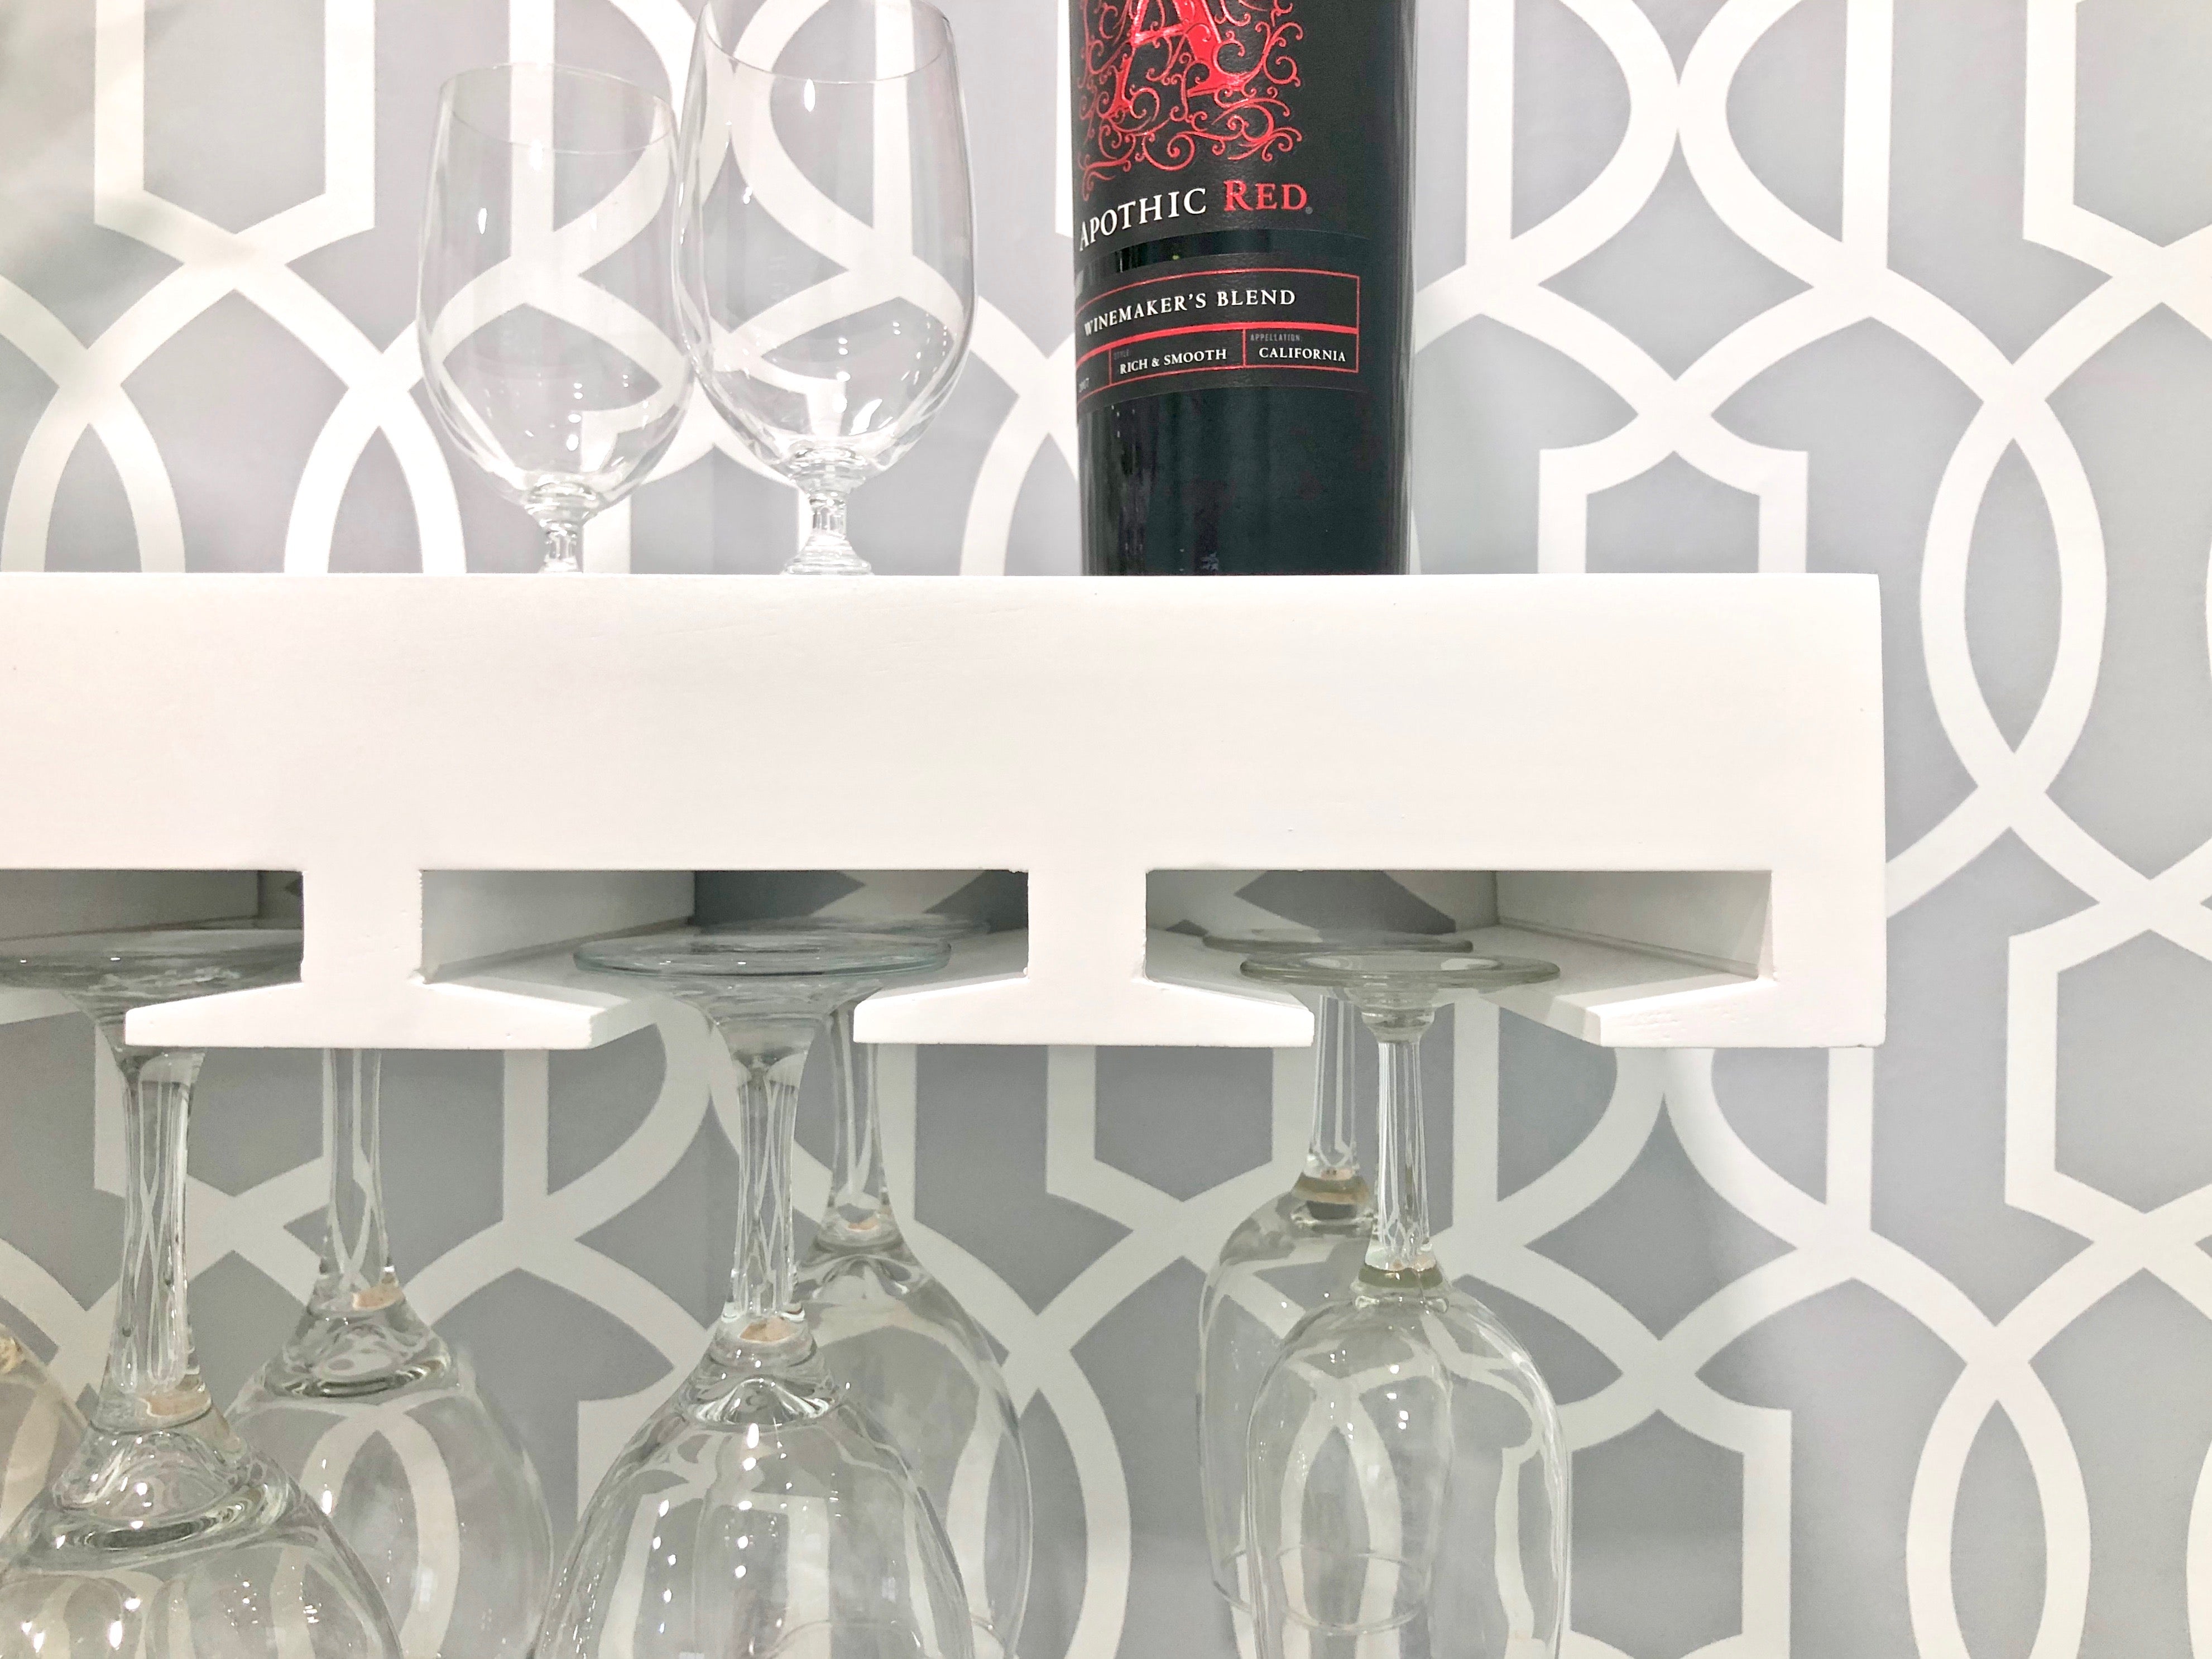 US Fast Shipping Wine Glass Rack Under Cabinet Stemware Wine